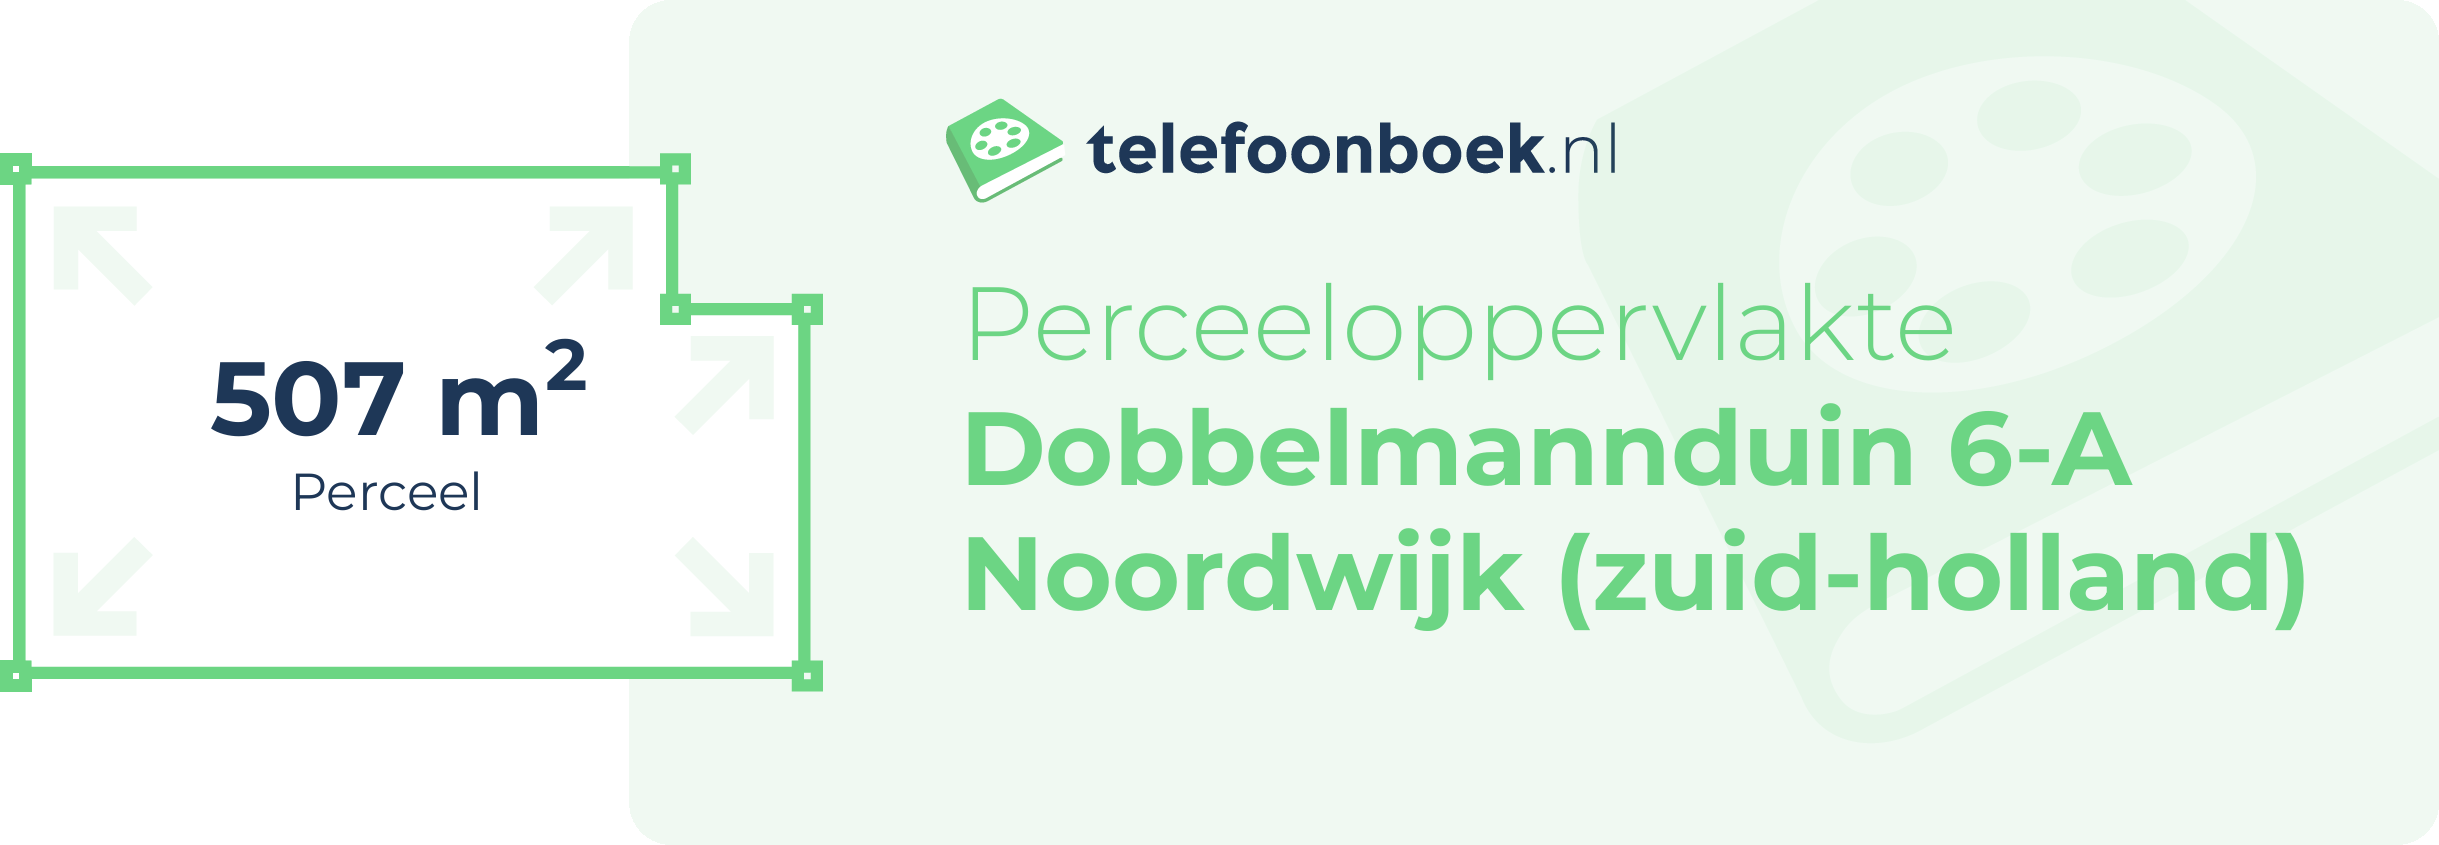 Perceeloppervlakte Dobbelmannduin 6-A Noordwijk (Zuid-Holland)